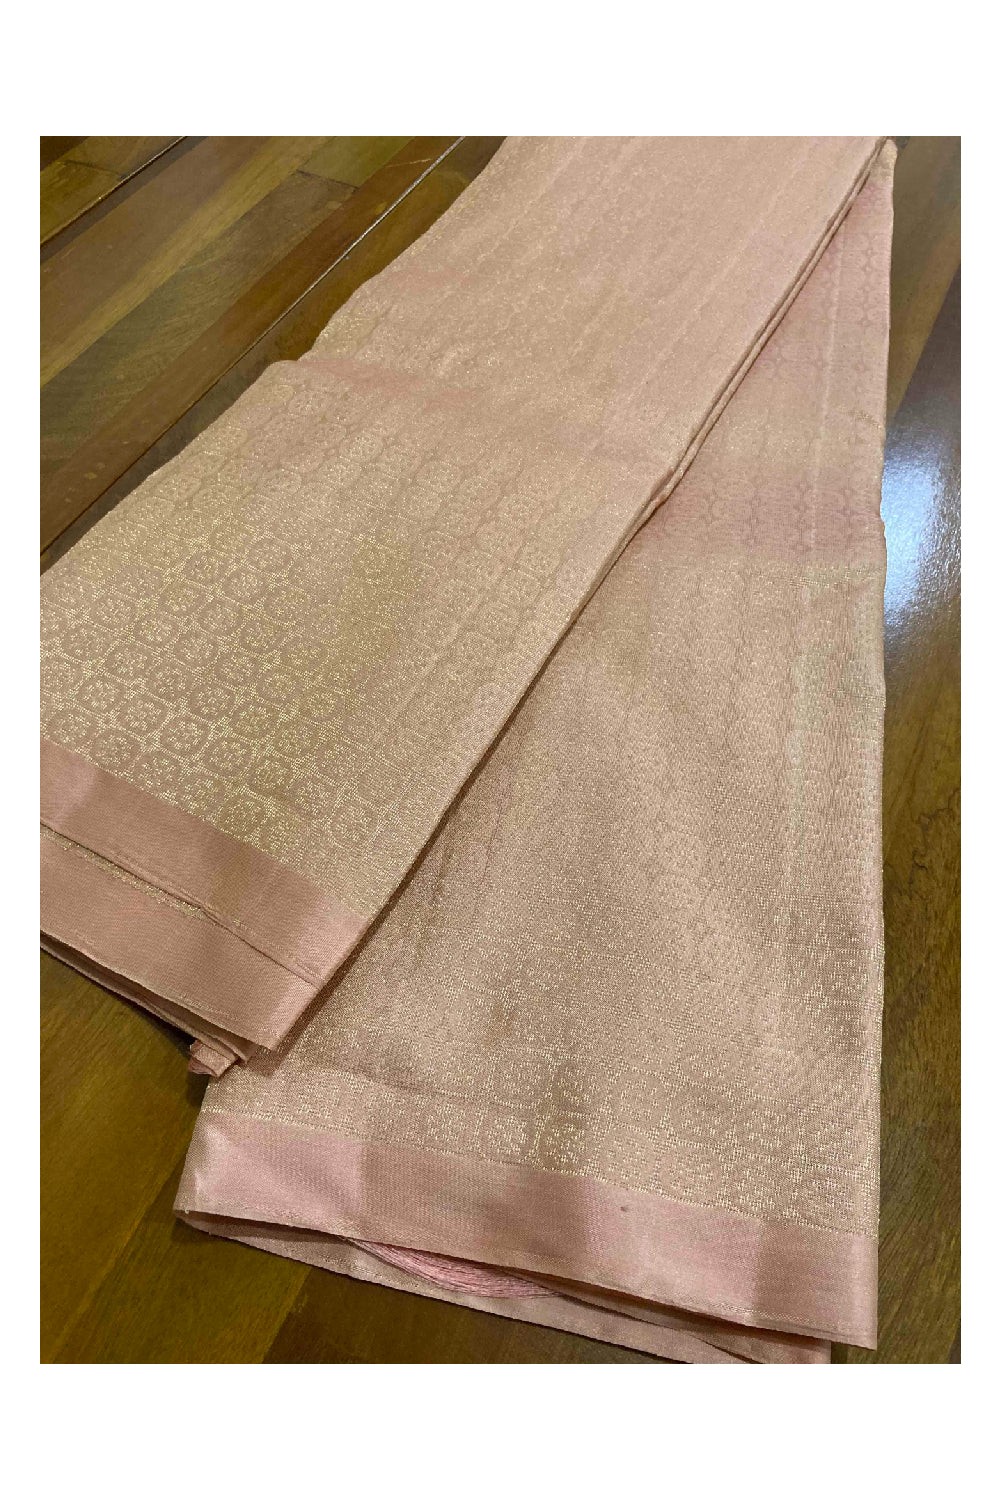 Southloom Handloom Pure Silk Manthrakodi Kanchipuram Saree in Single Pinkish Colour and Silver Zari Motifs